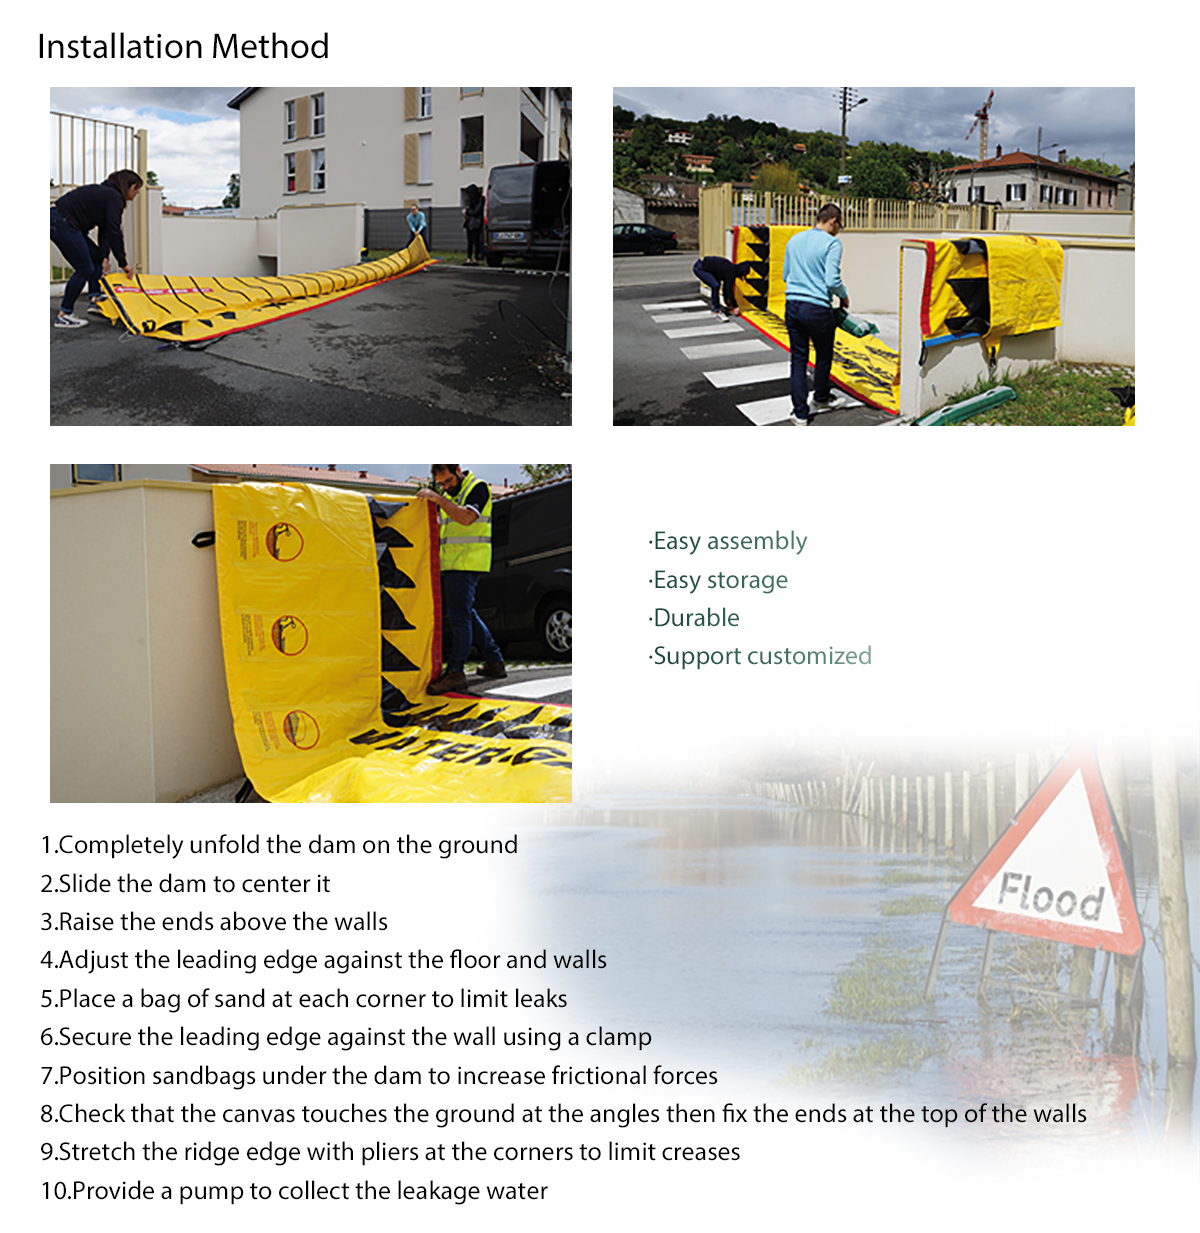 Instllation method of water gate self rising flood barrier